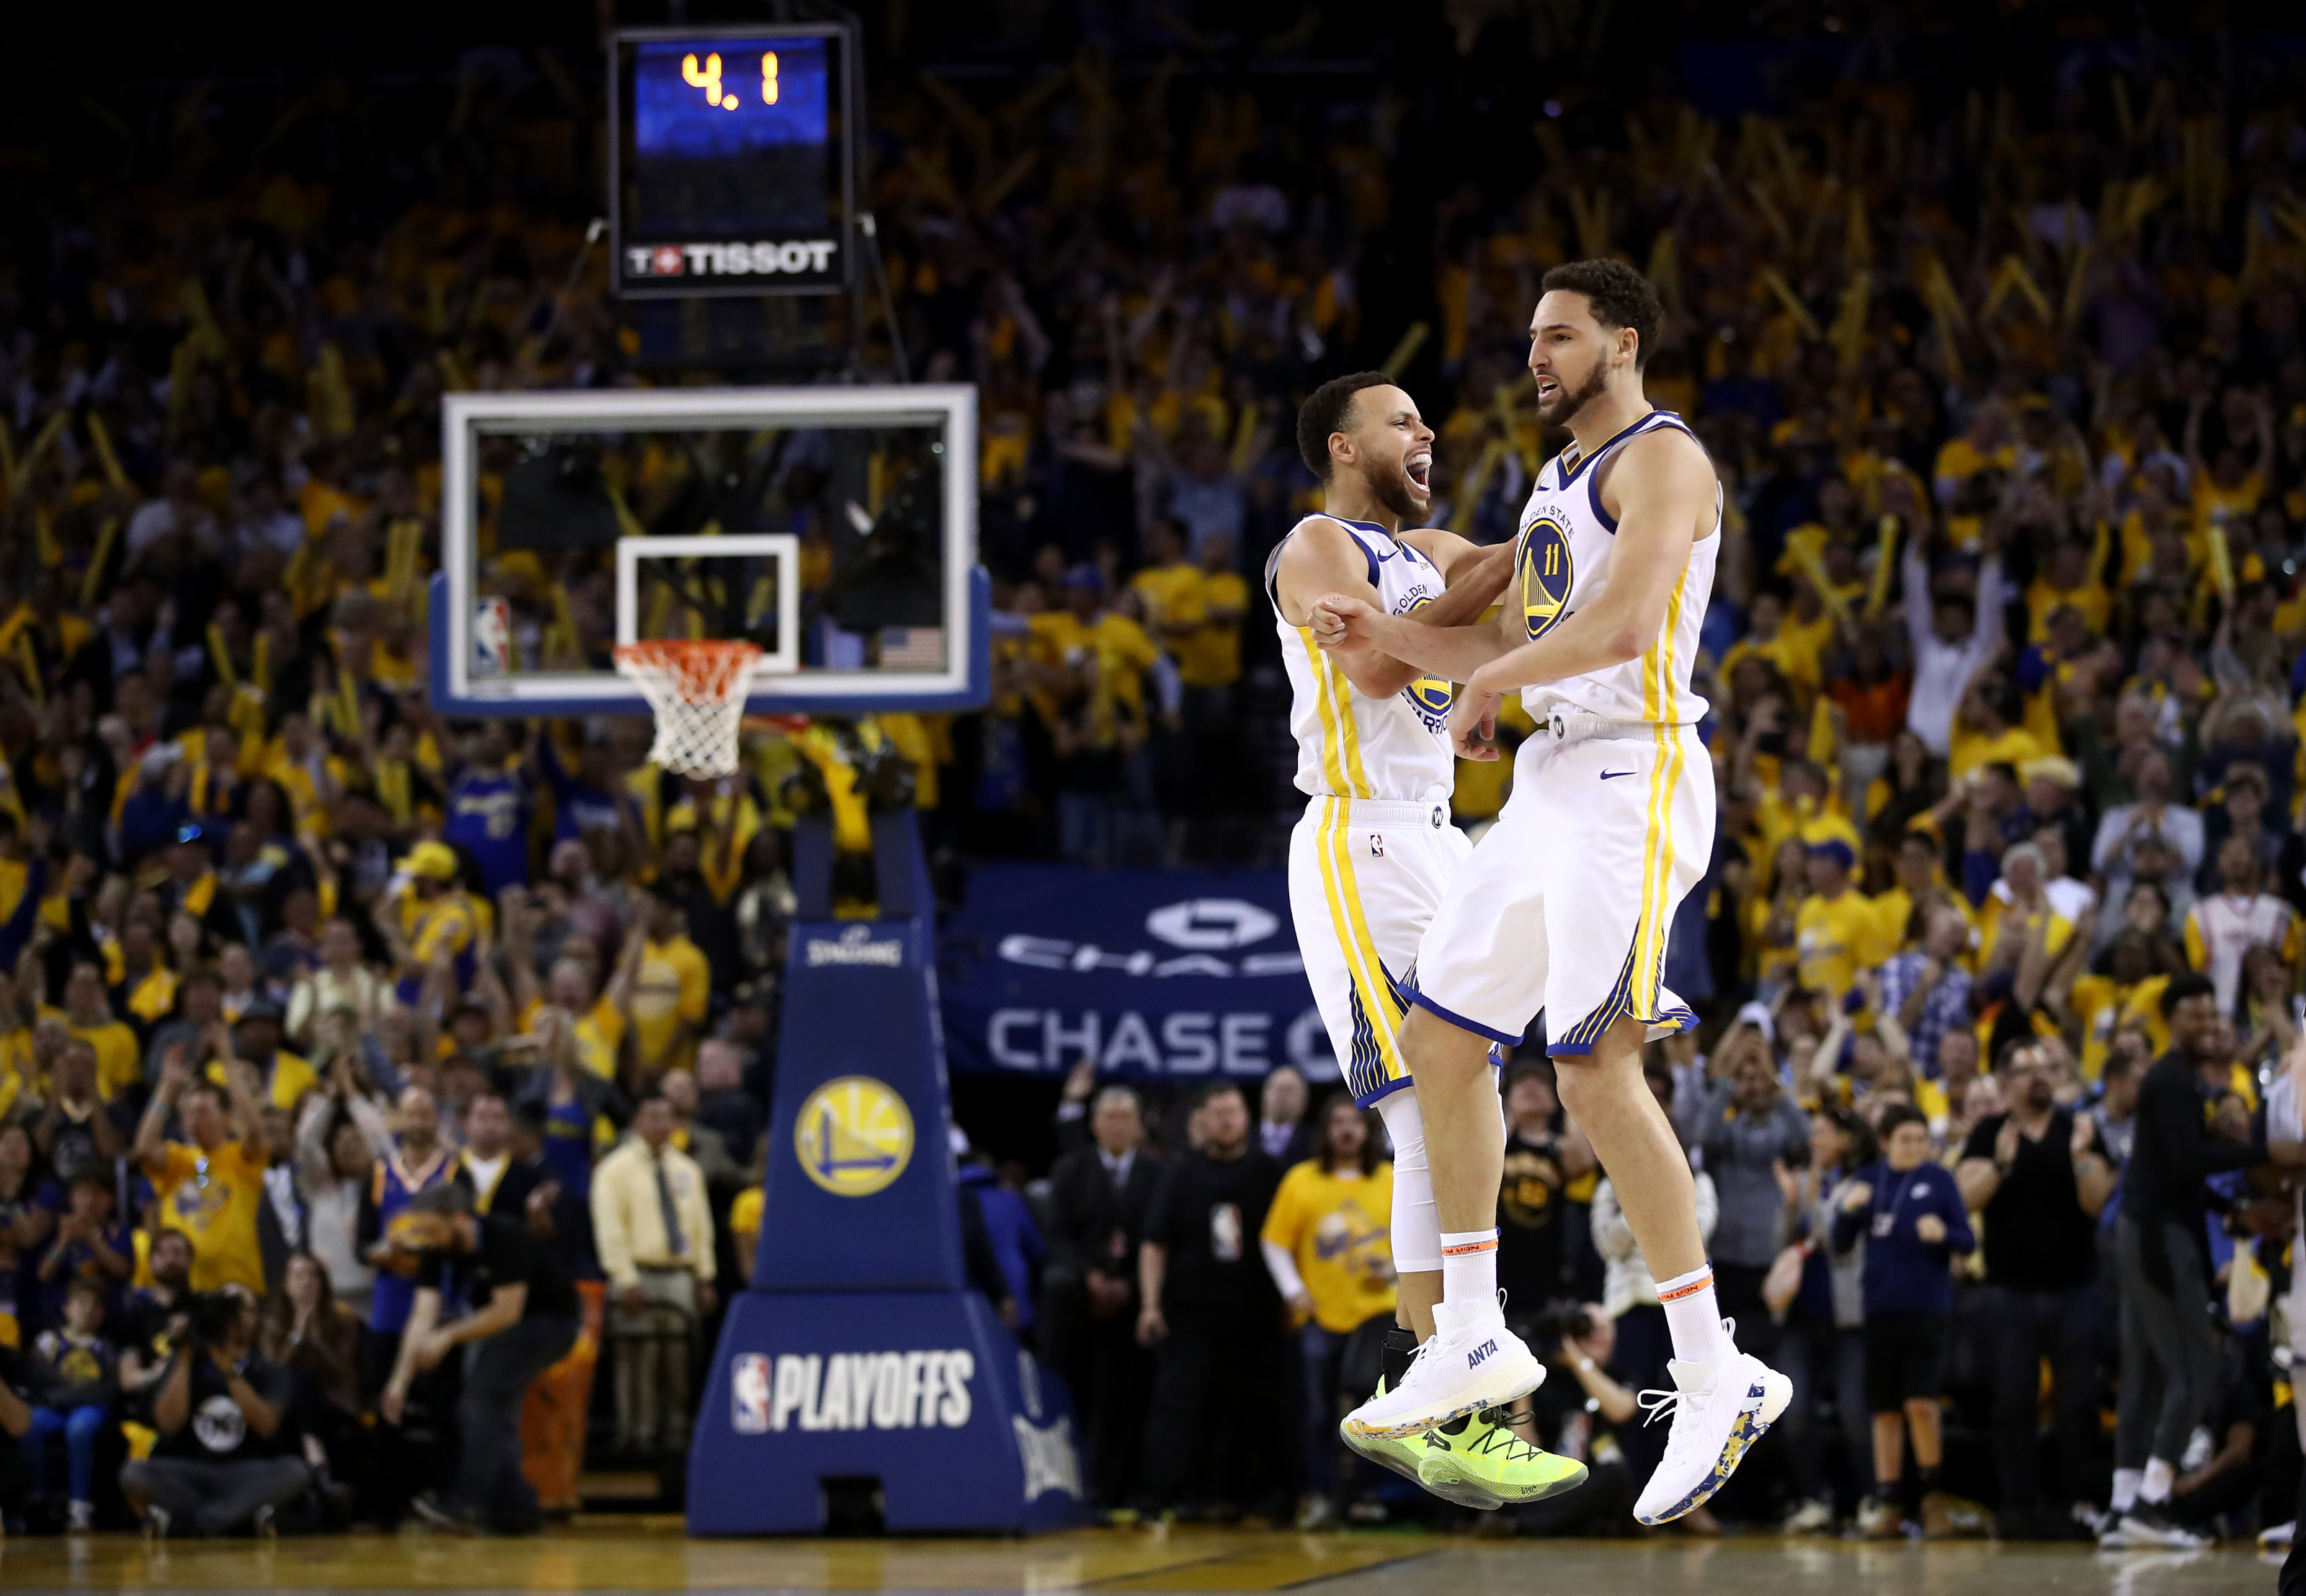 HD wallpaper: Stephen Curry and Klay Thompson, NBA, basketball